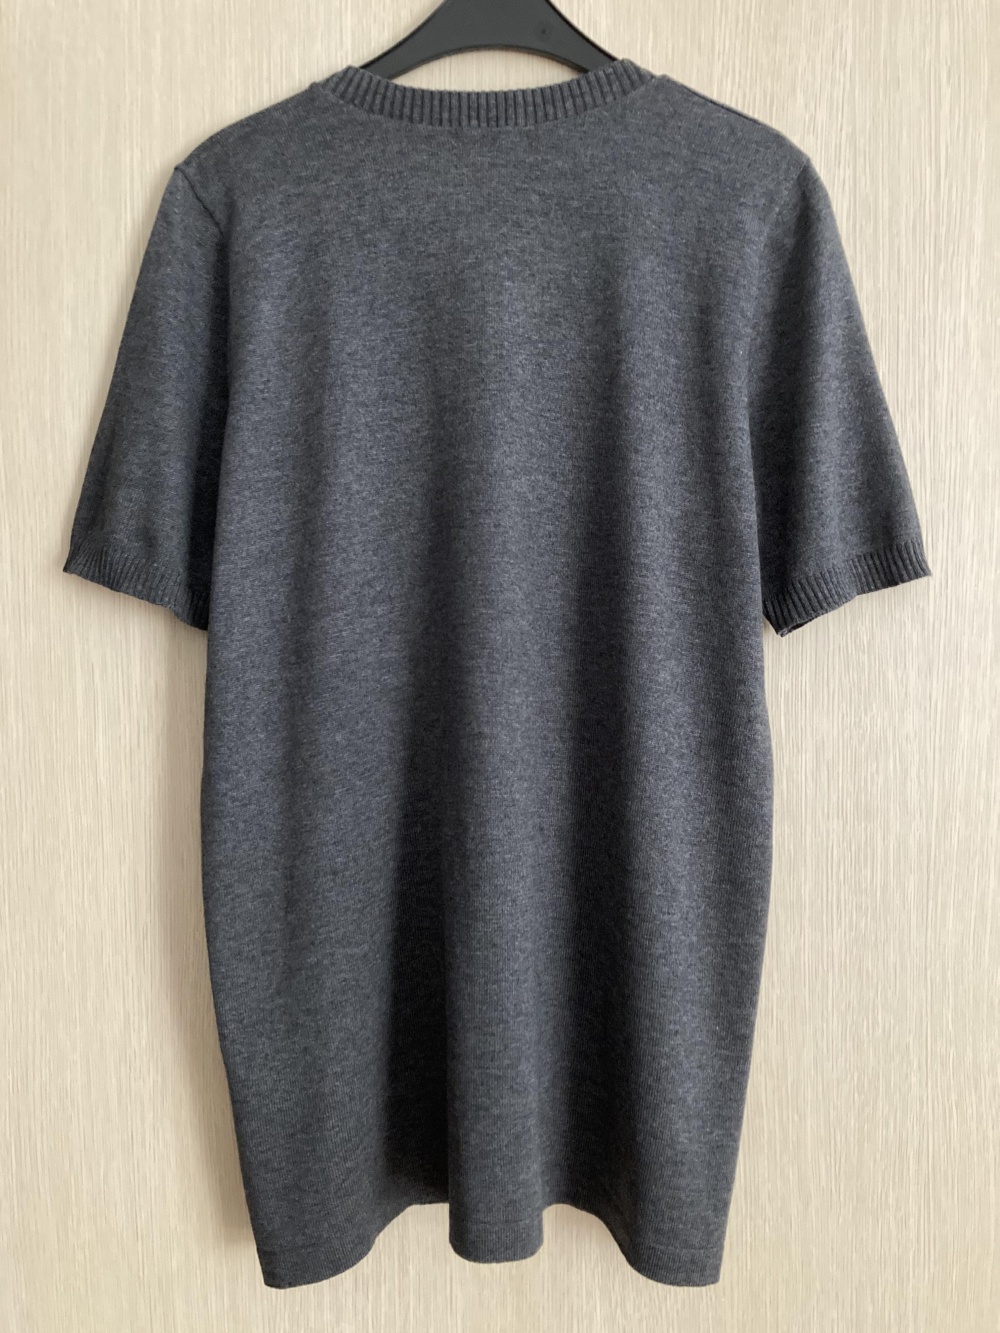 Пуловер “ Jenidas ”, L-XL размер